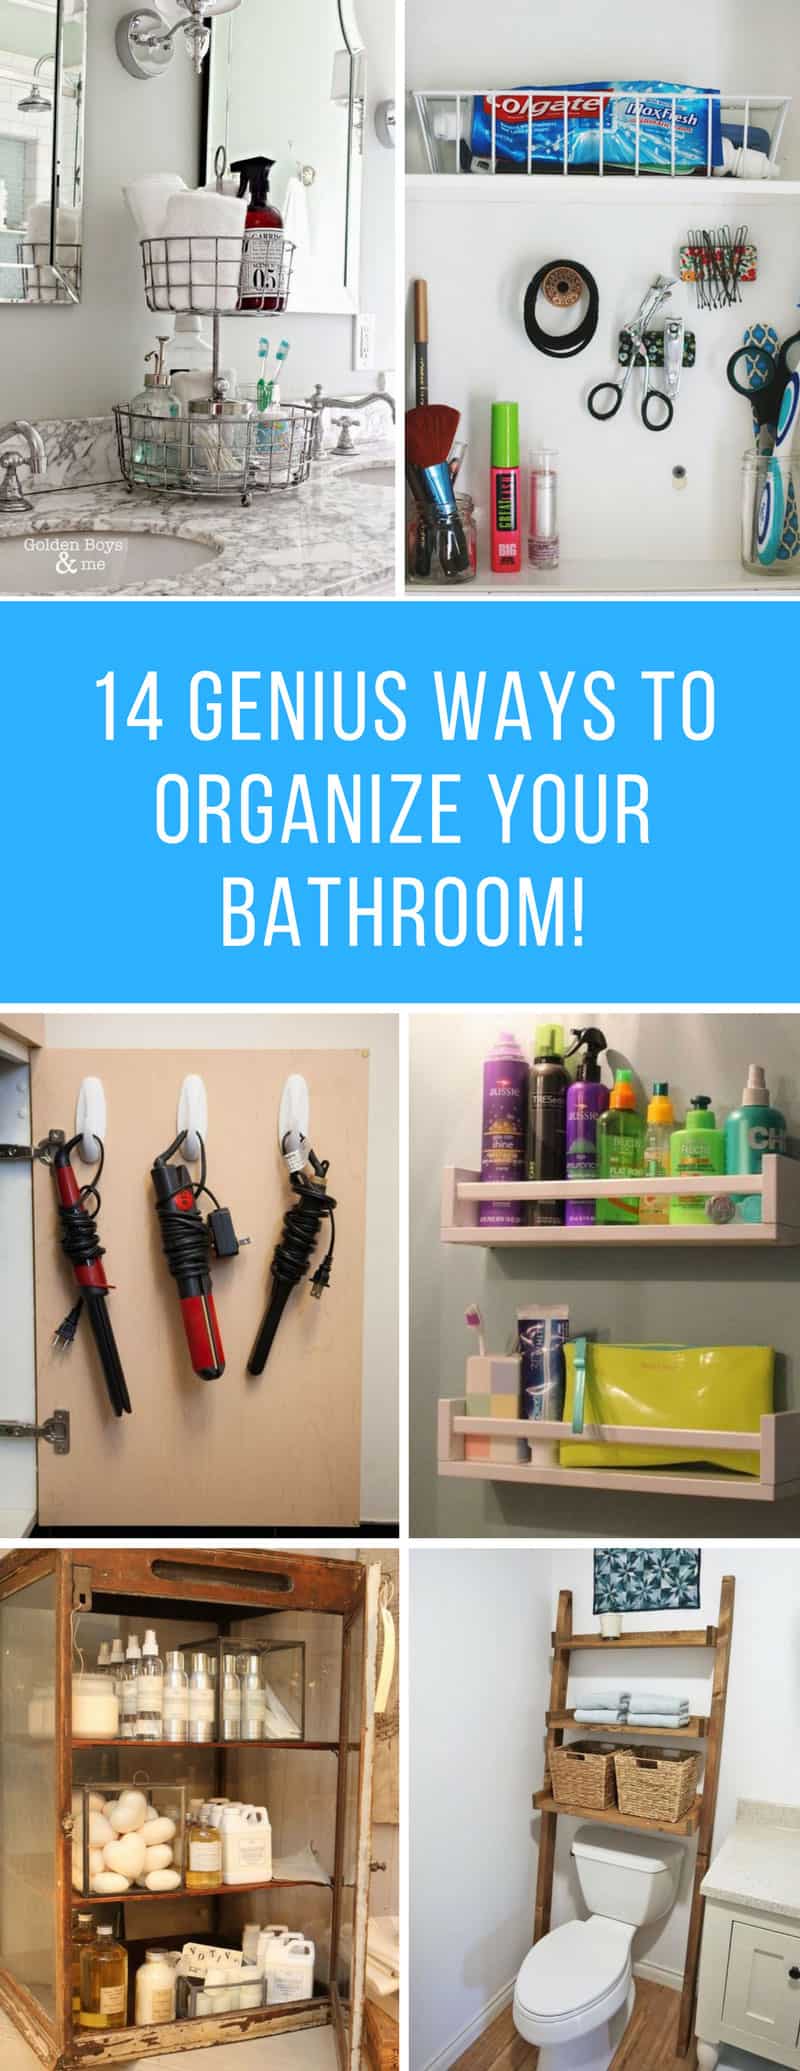 Bathroom Organization Ideas - So many genius hacks to restore your bathroom from chaos to calm! #organization #bathroom